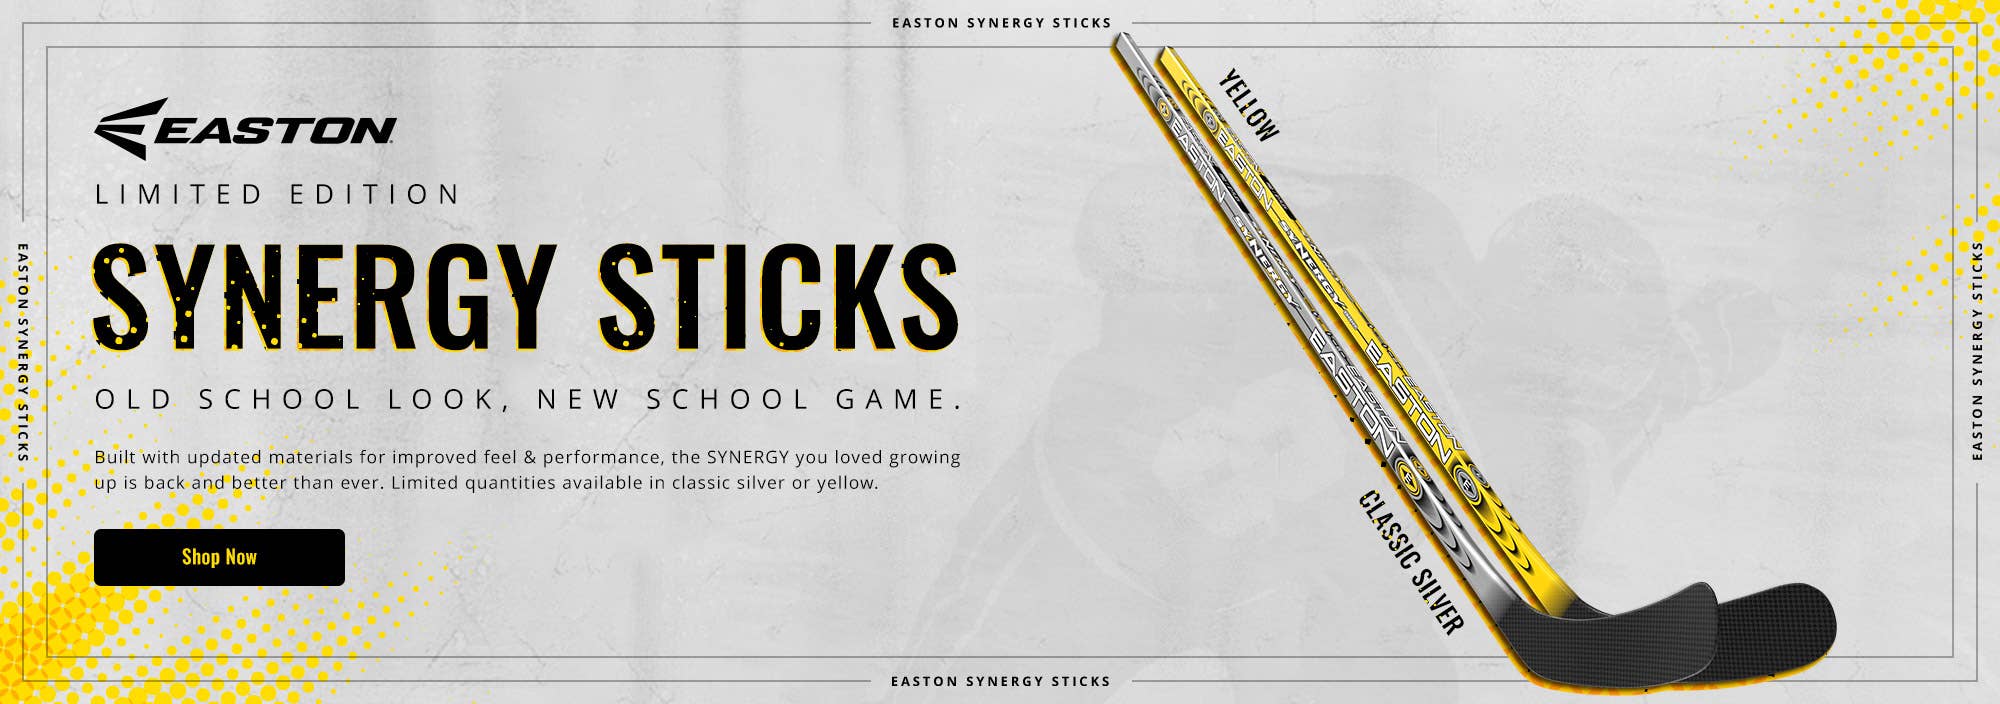 Easton Synergy Hockey Sticks